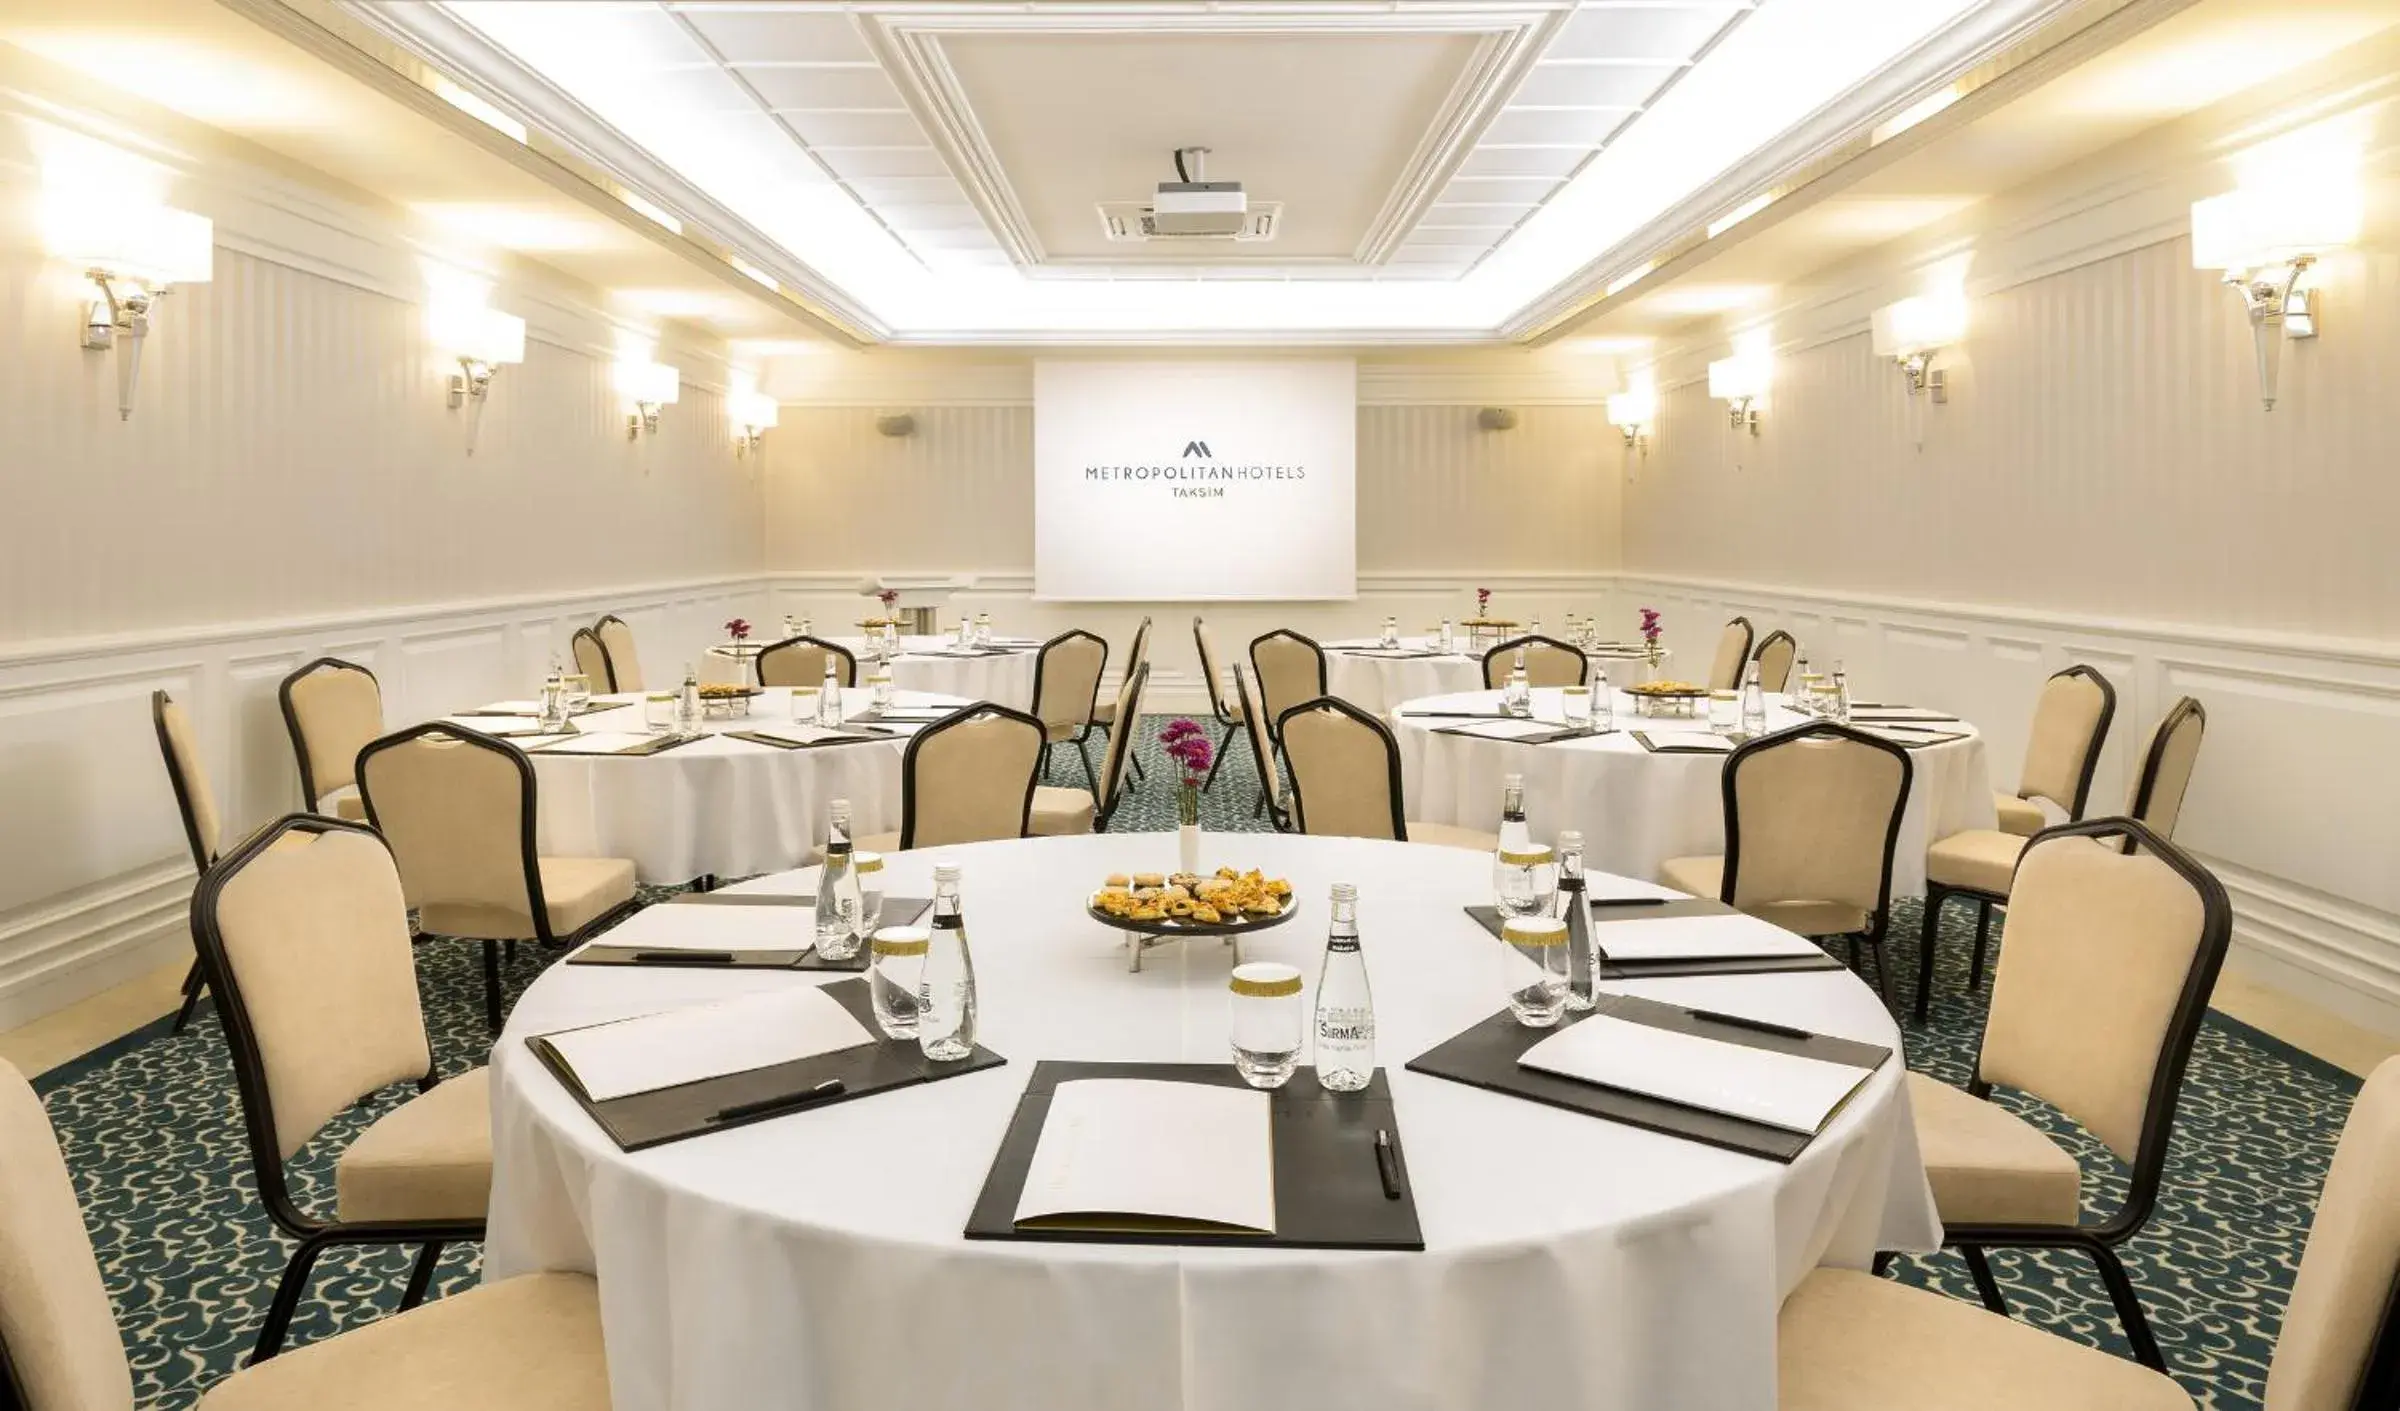 Meeting/conference room, Banquet Facilities in Metropolitan Hotels Taksim